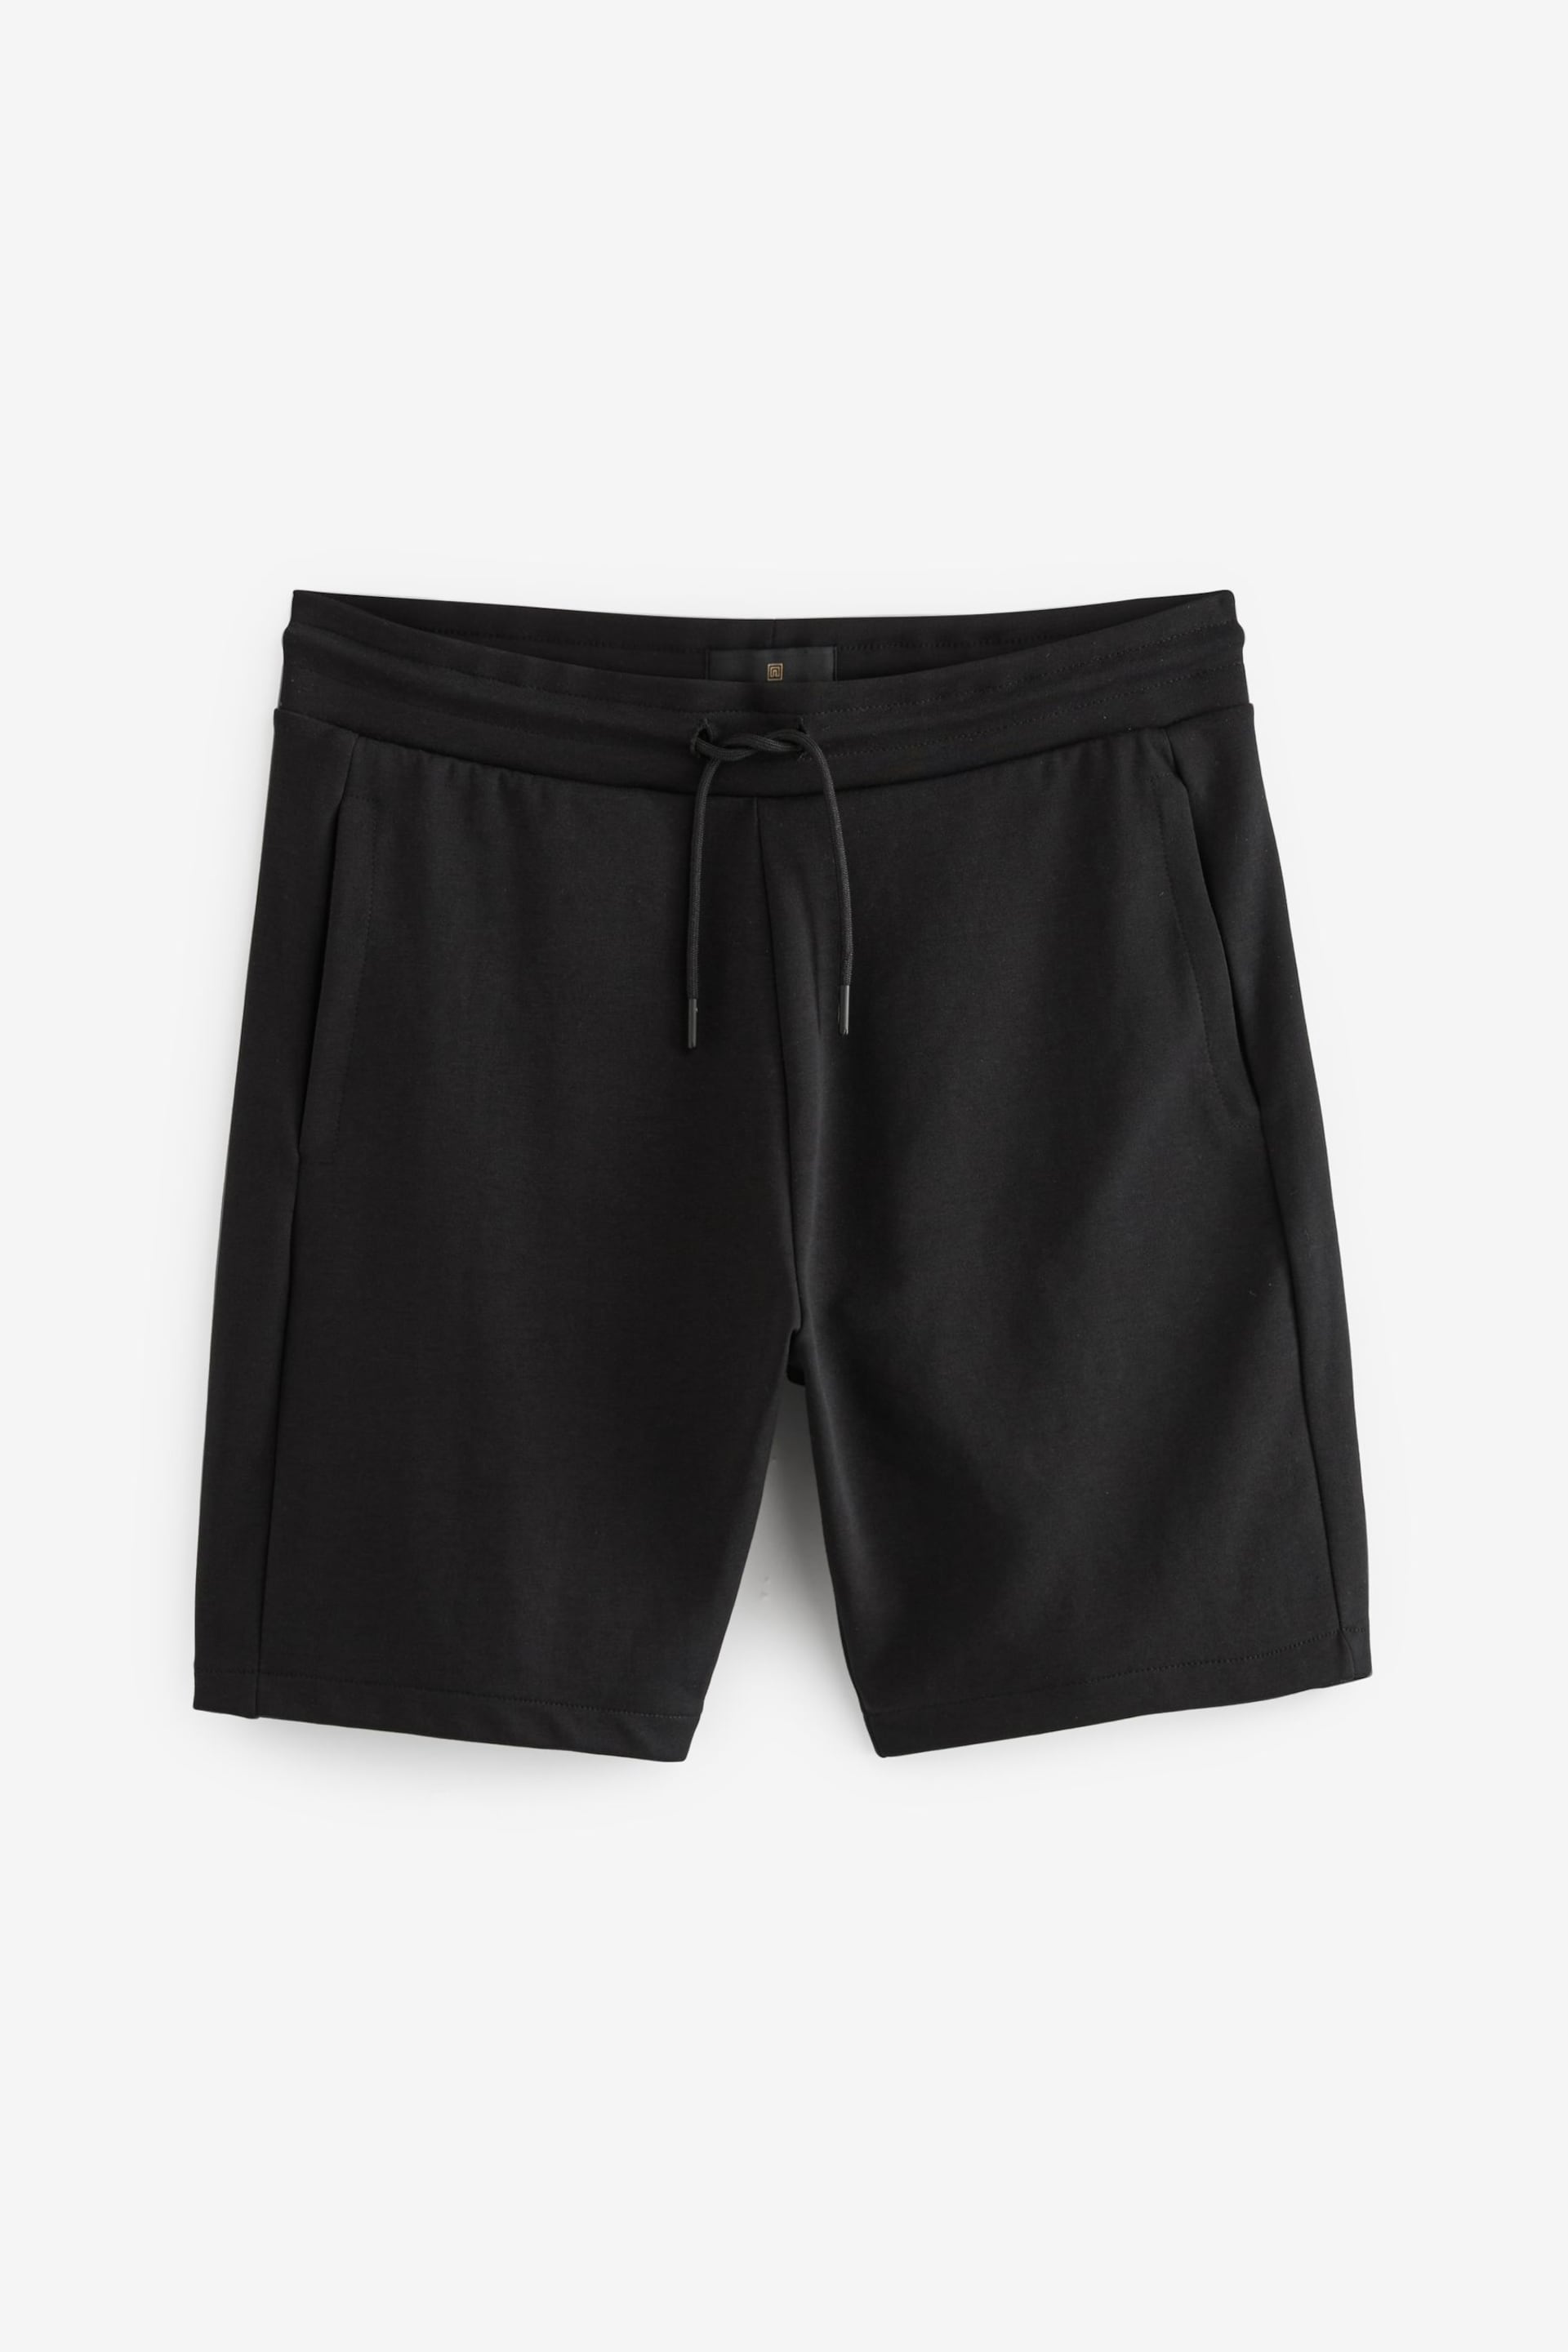 Black Zip Pocket Jersey Shorts - Image 6 of 9